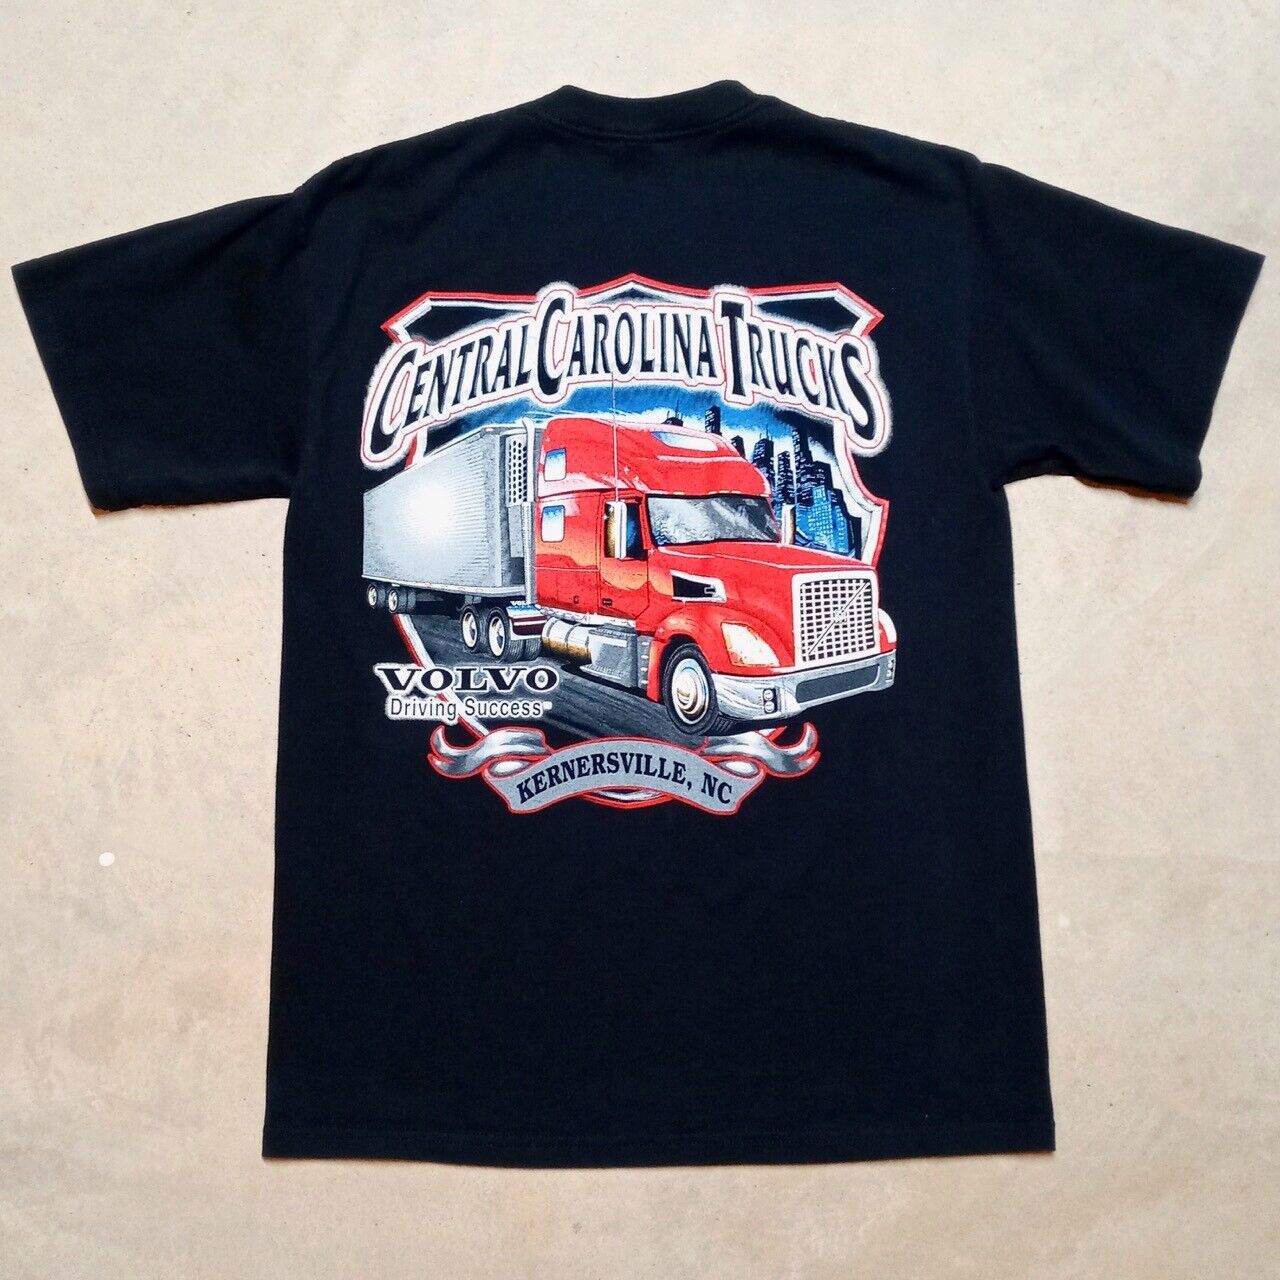 Primary image for Central Carolina Trucks Volvo Semi Kernersville NC T-shirt - Men's Size Medium